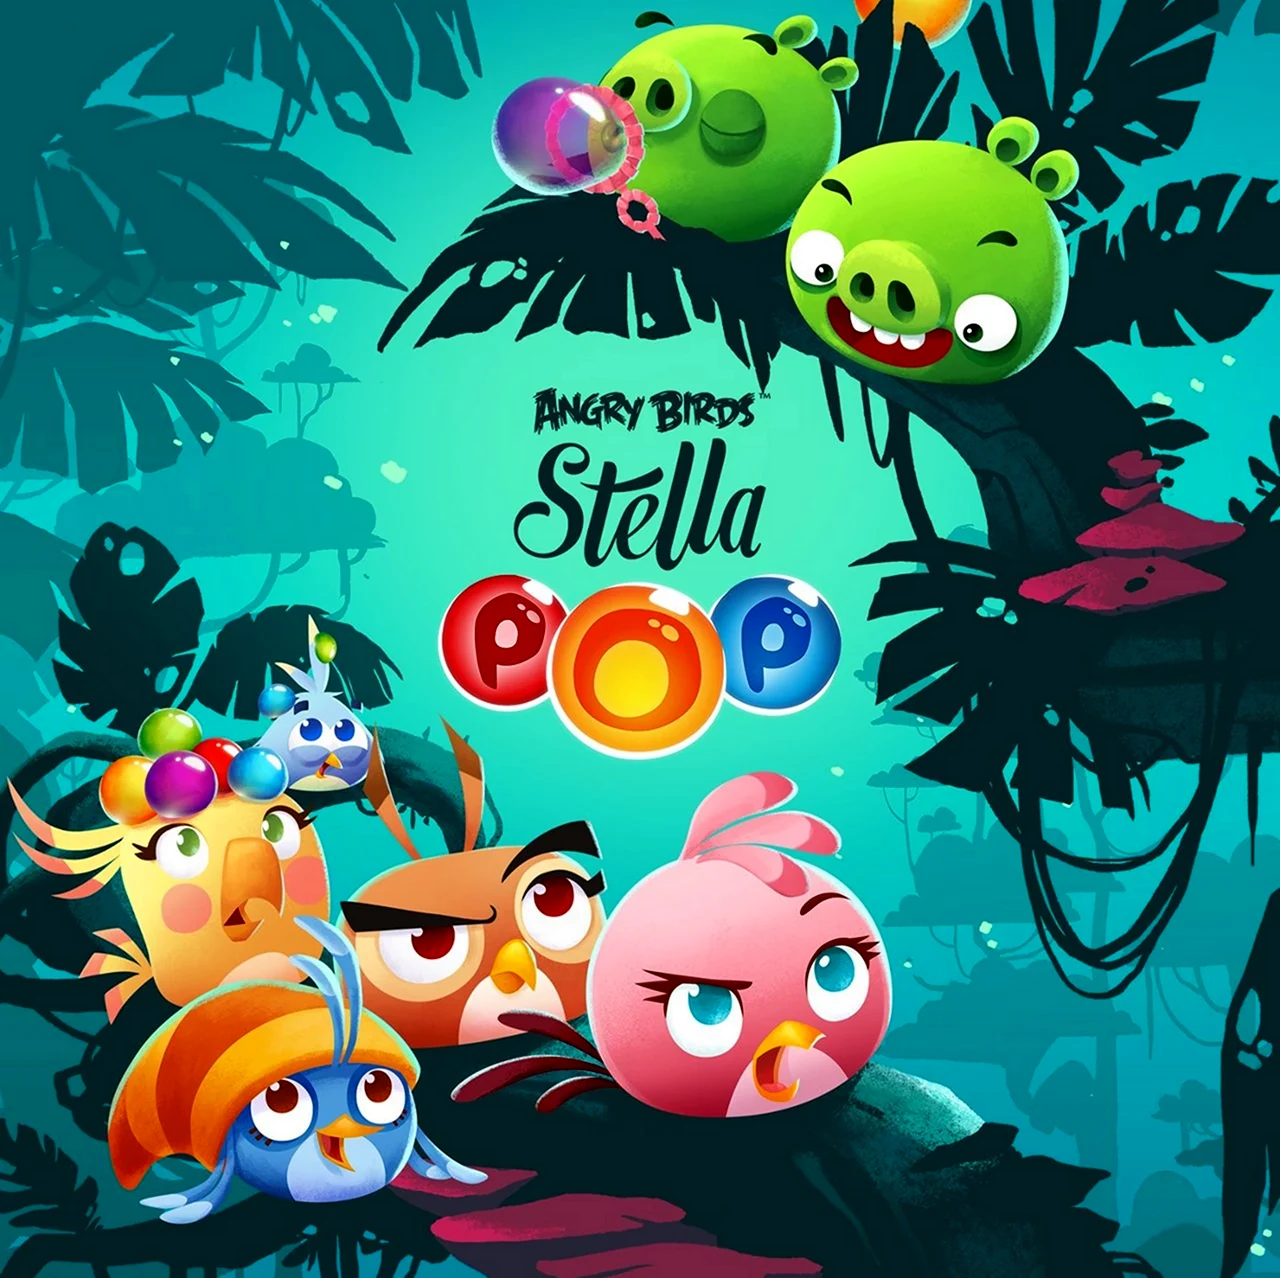 Angry Birds Stella Pop игра. Картинка из мультфильма